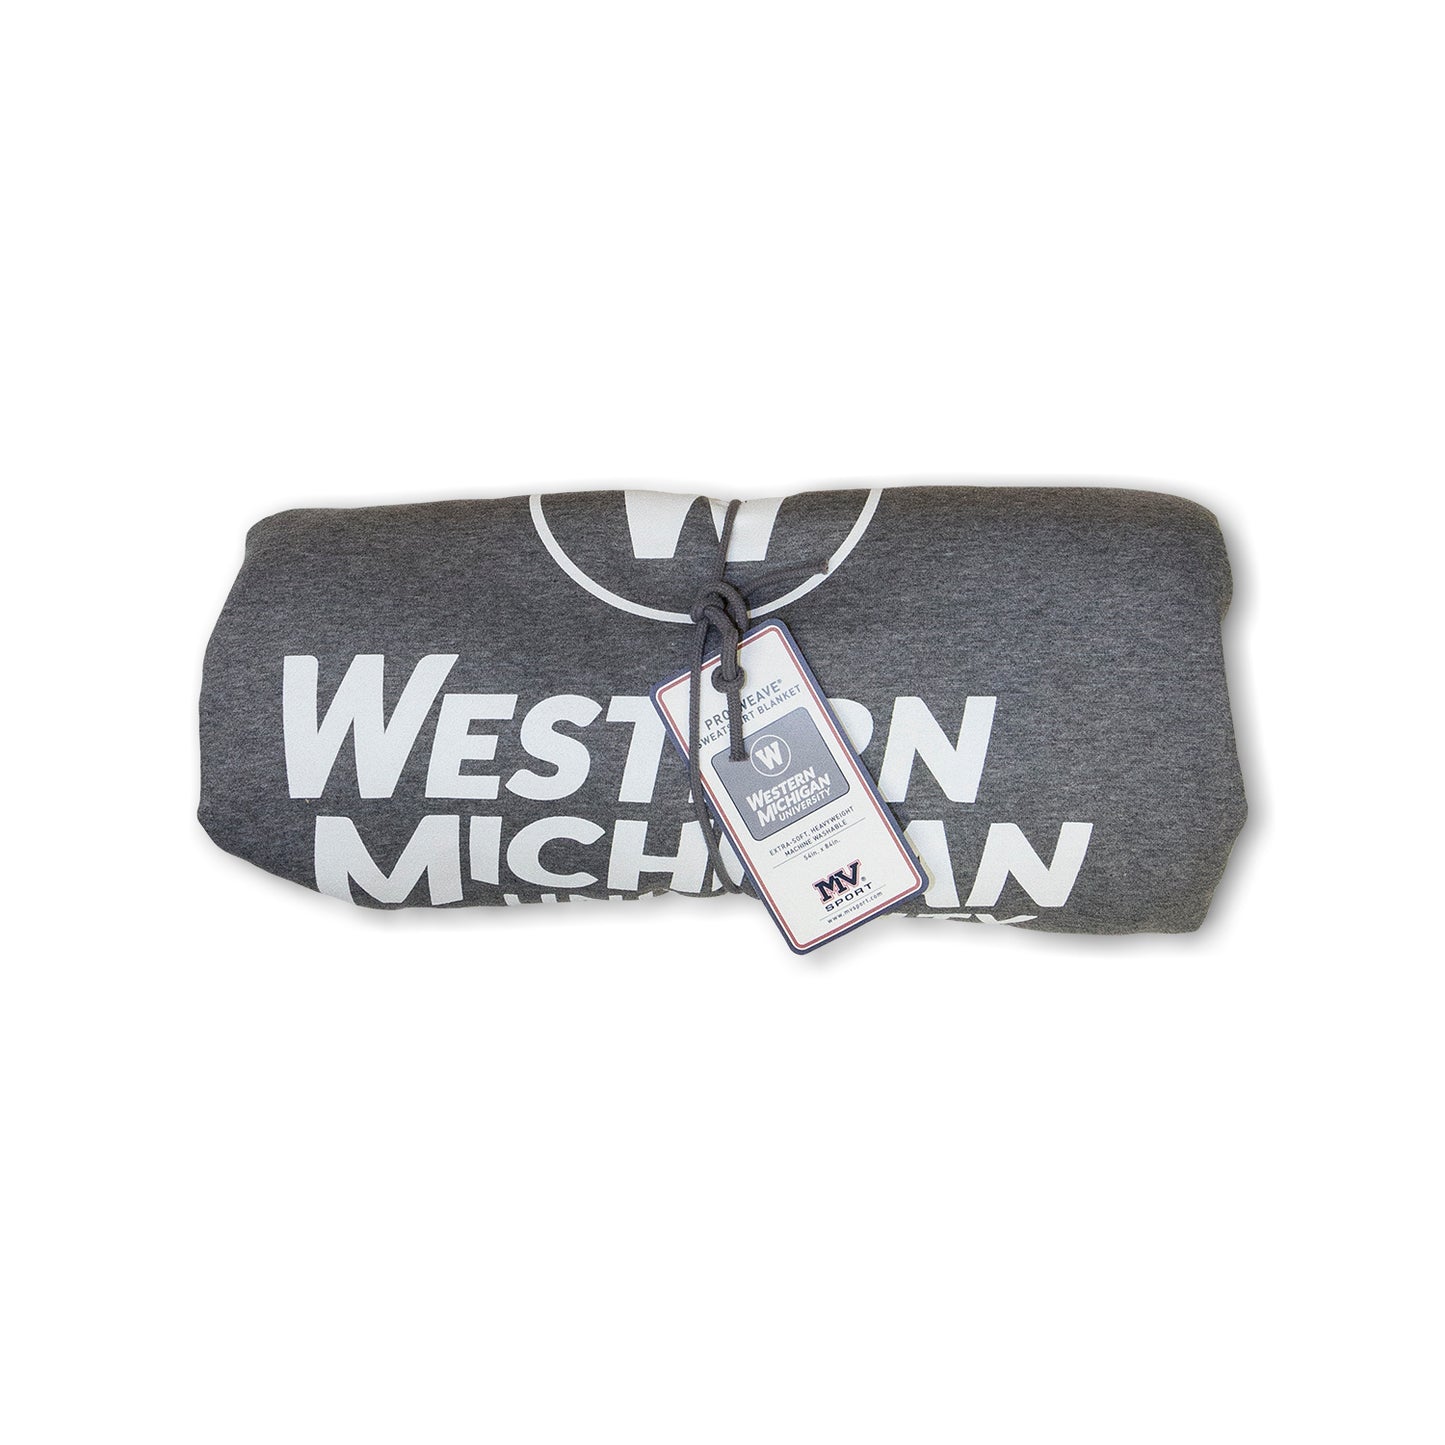 Western Michigan University Sweatshirt Blanket